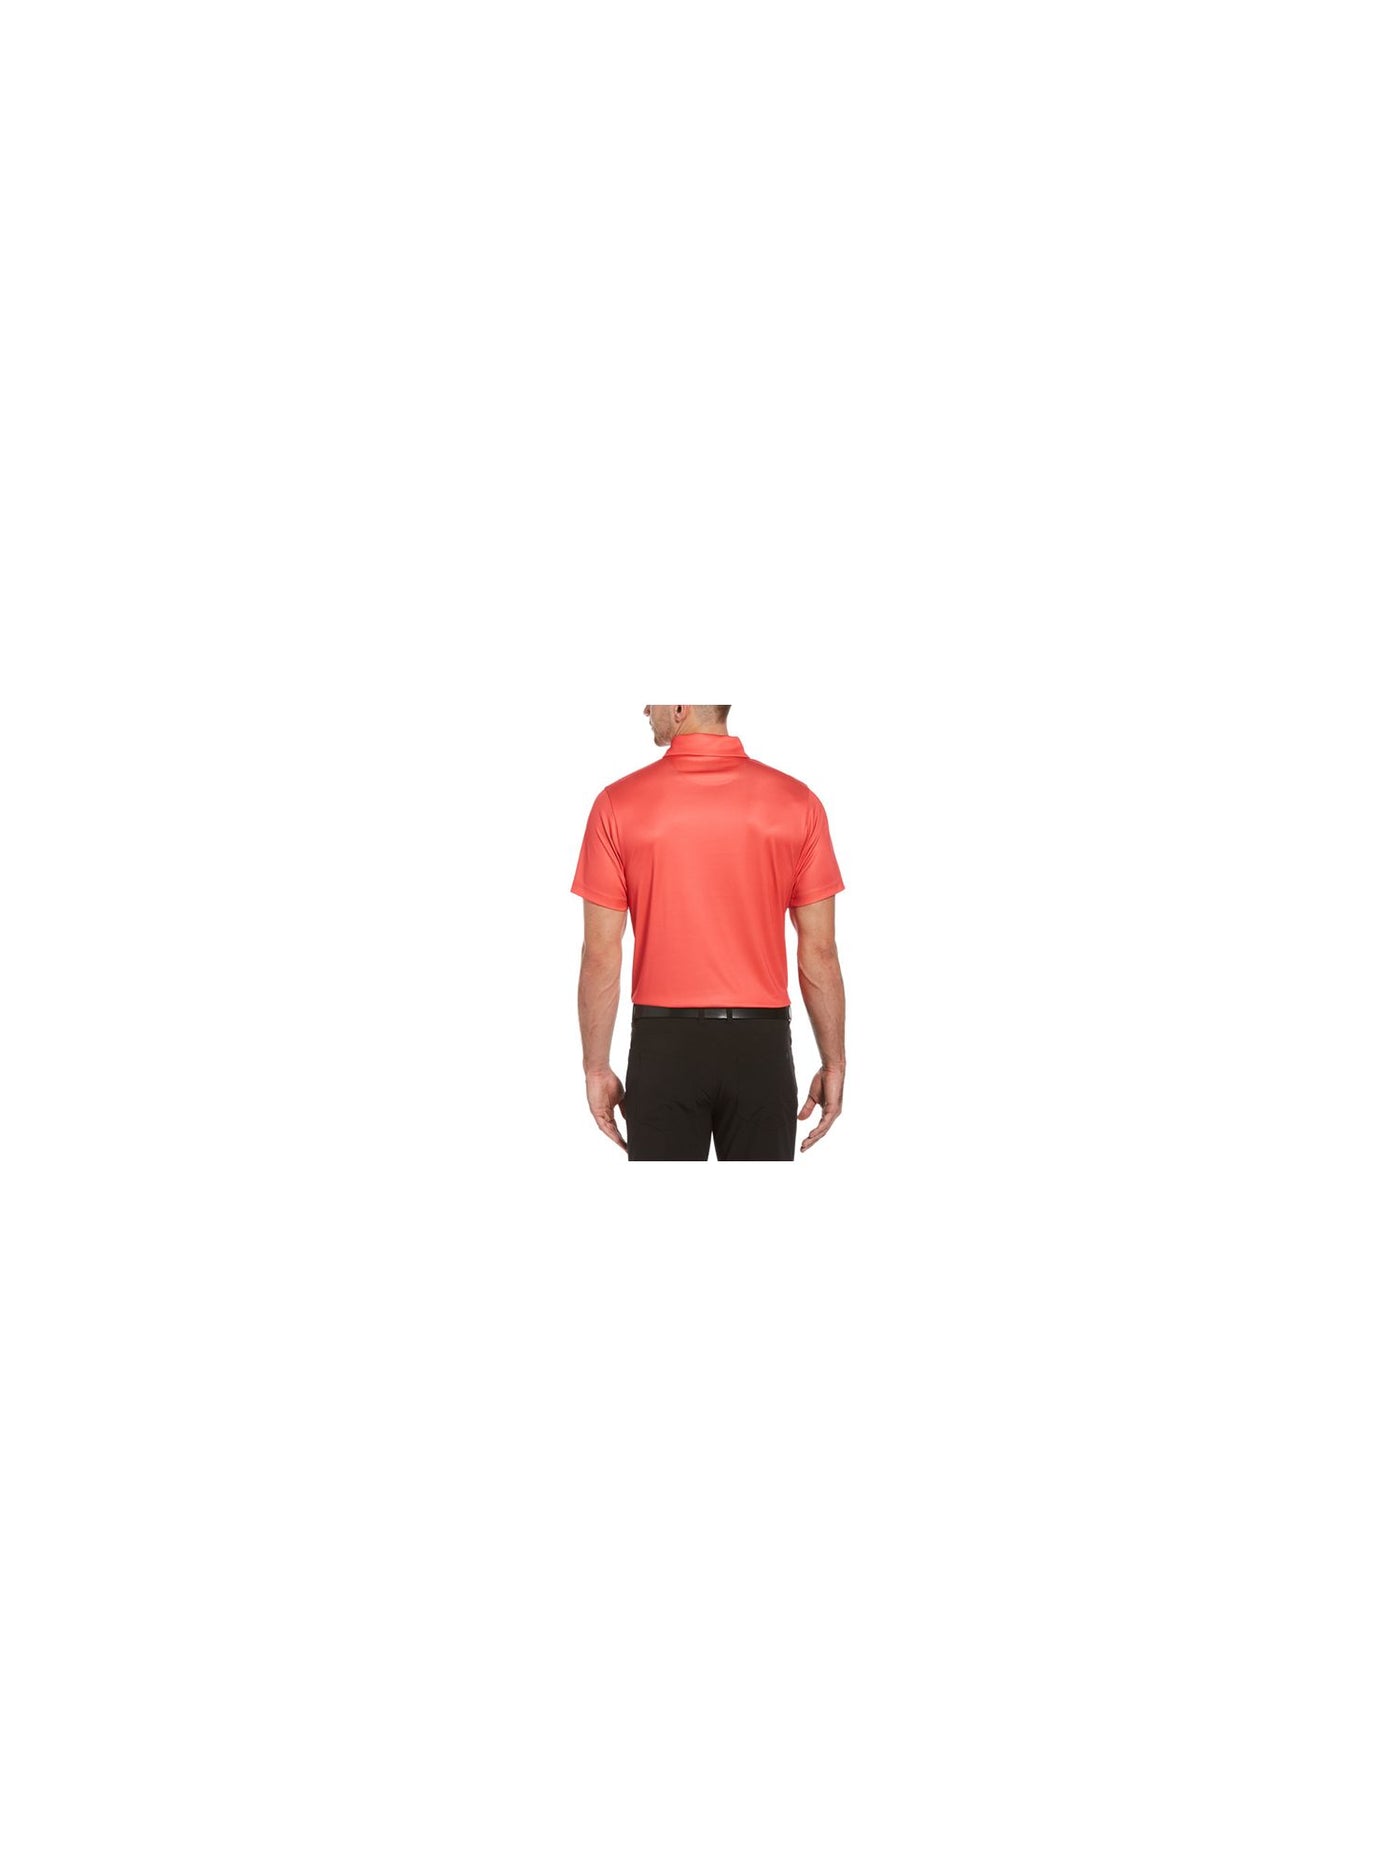 HYBRID APPAREL Mens Golf Red Short Sleeve Stretch Polo S